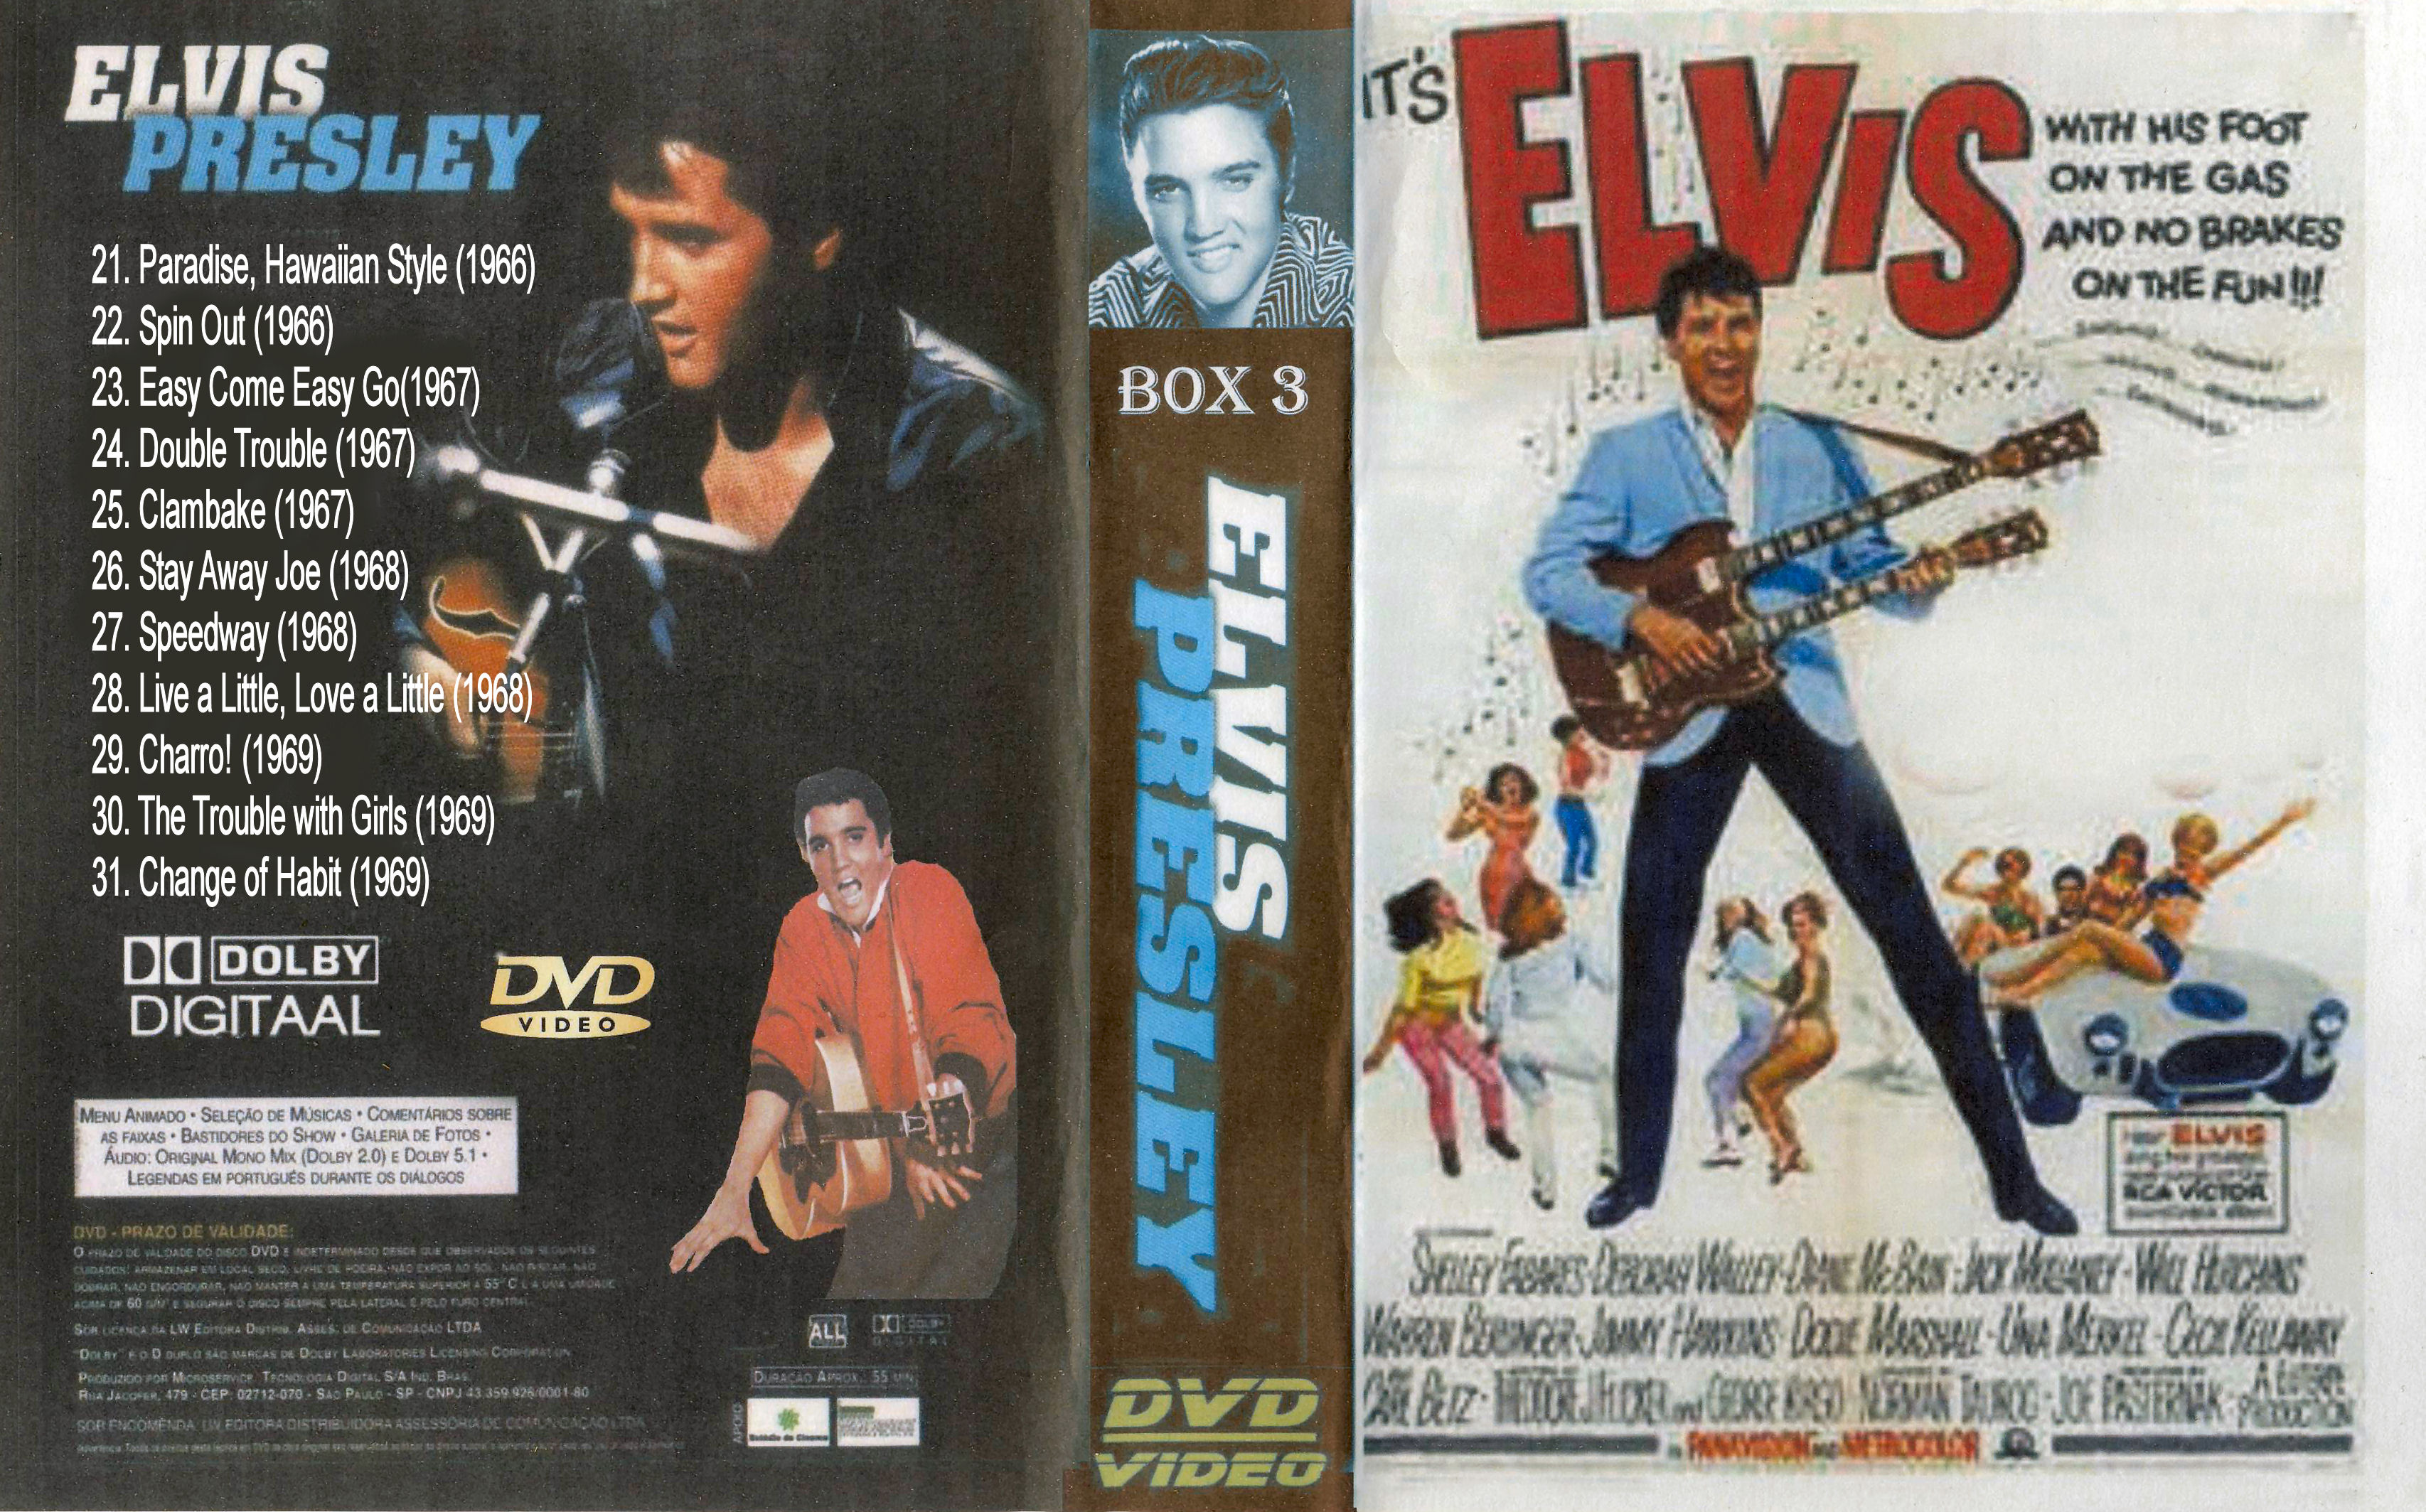 Elvis Presley Collectie ( 28. Live a Little, Love a Little (1968) DvD 28 van 31